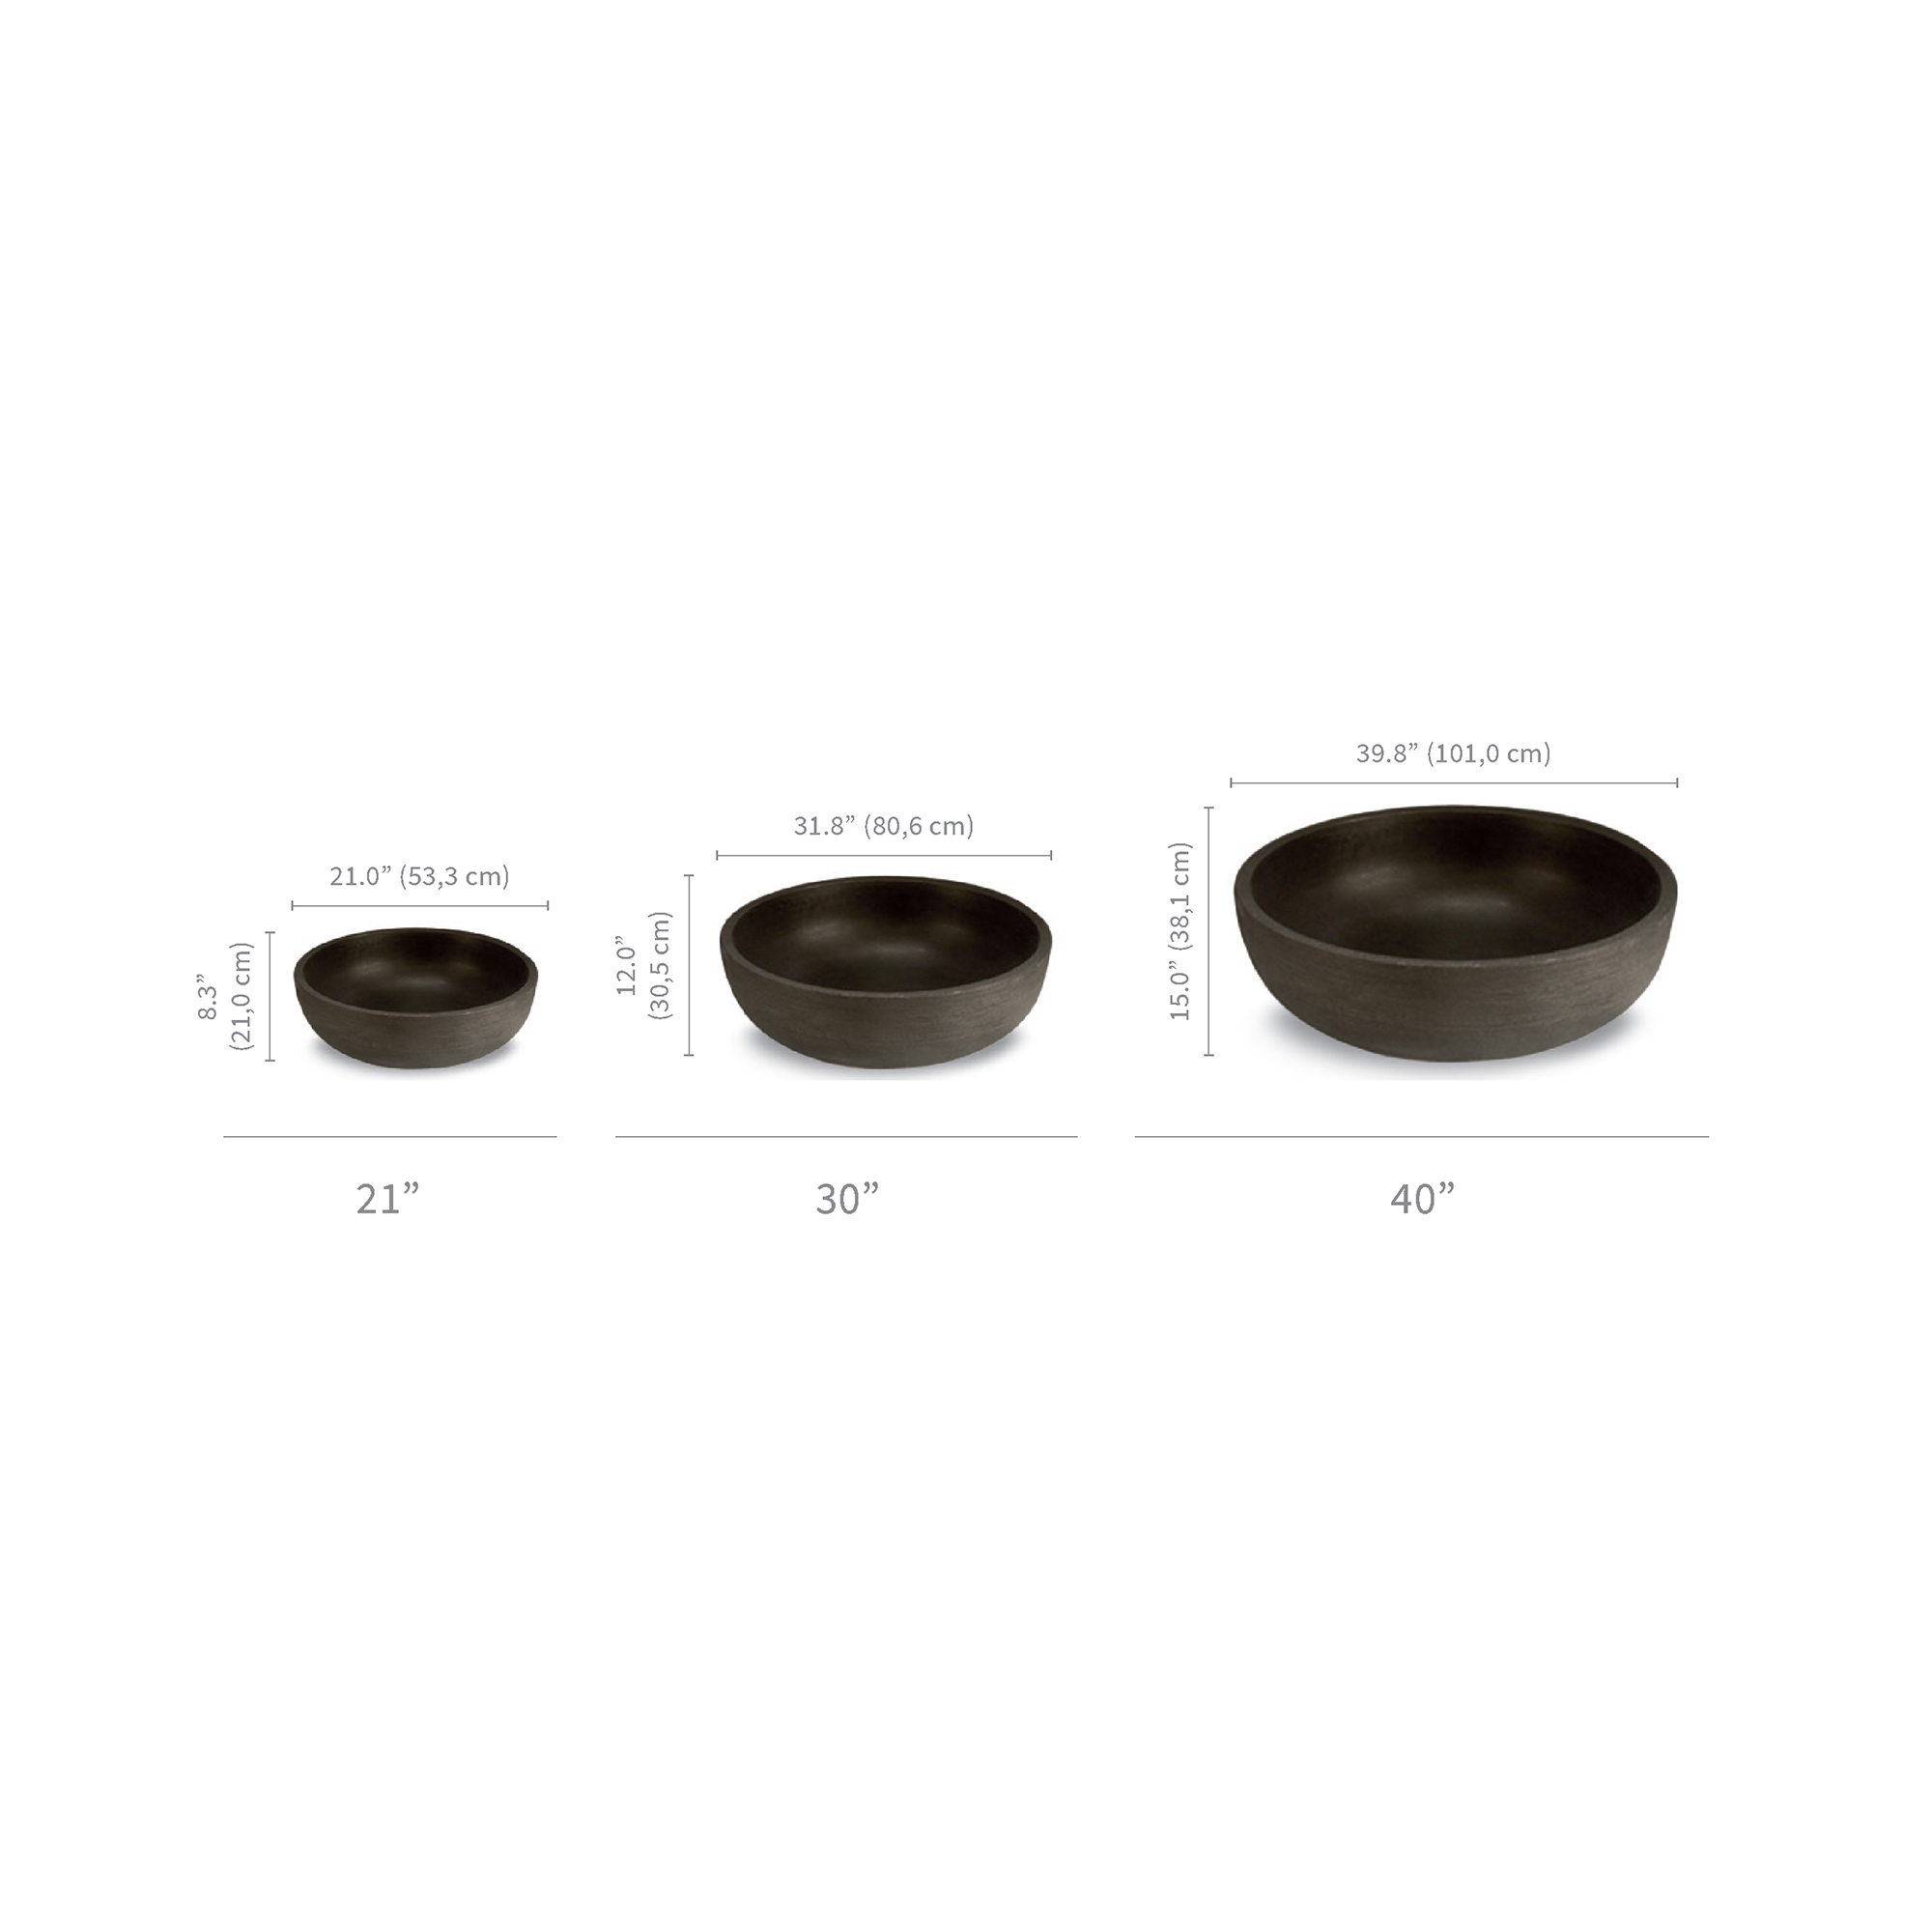 Orinoco bowls specifications